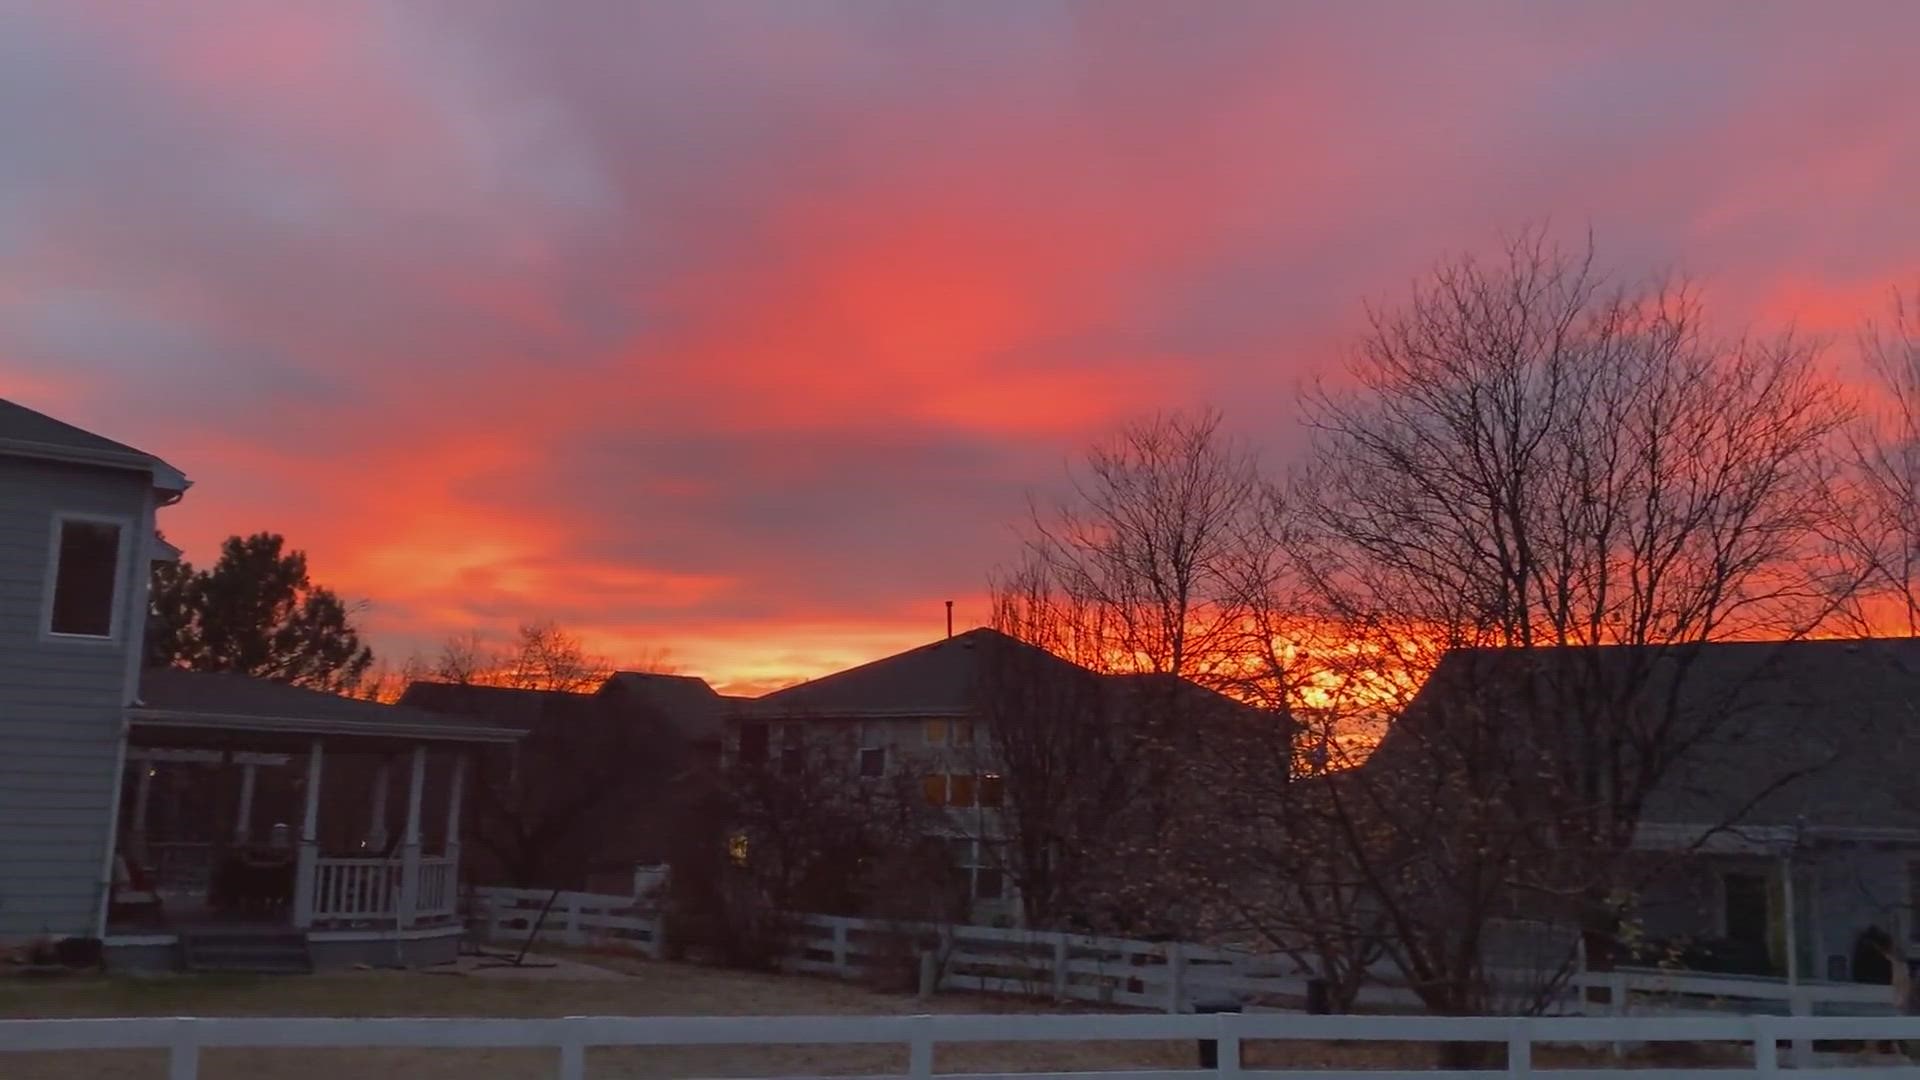 Video taken from my back deck in Greenwood Village.
Credit: Jenny Varnak